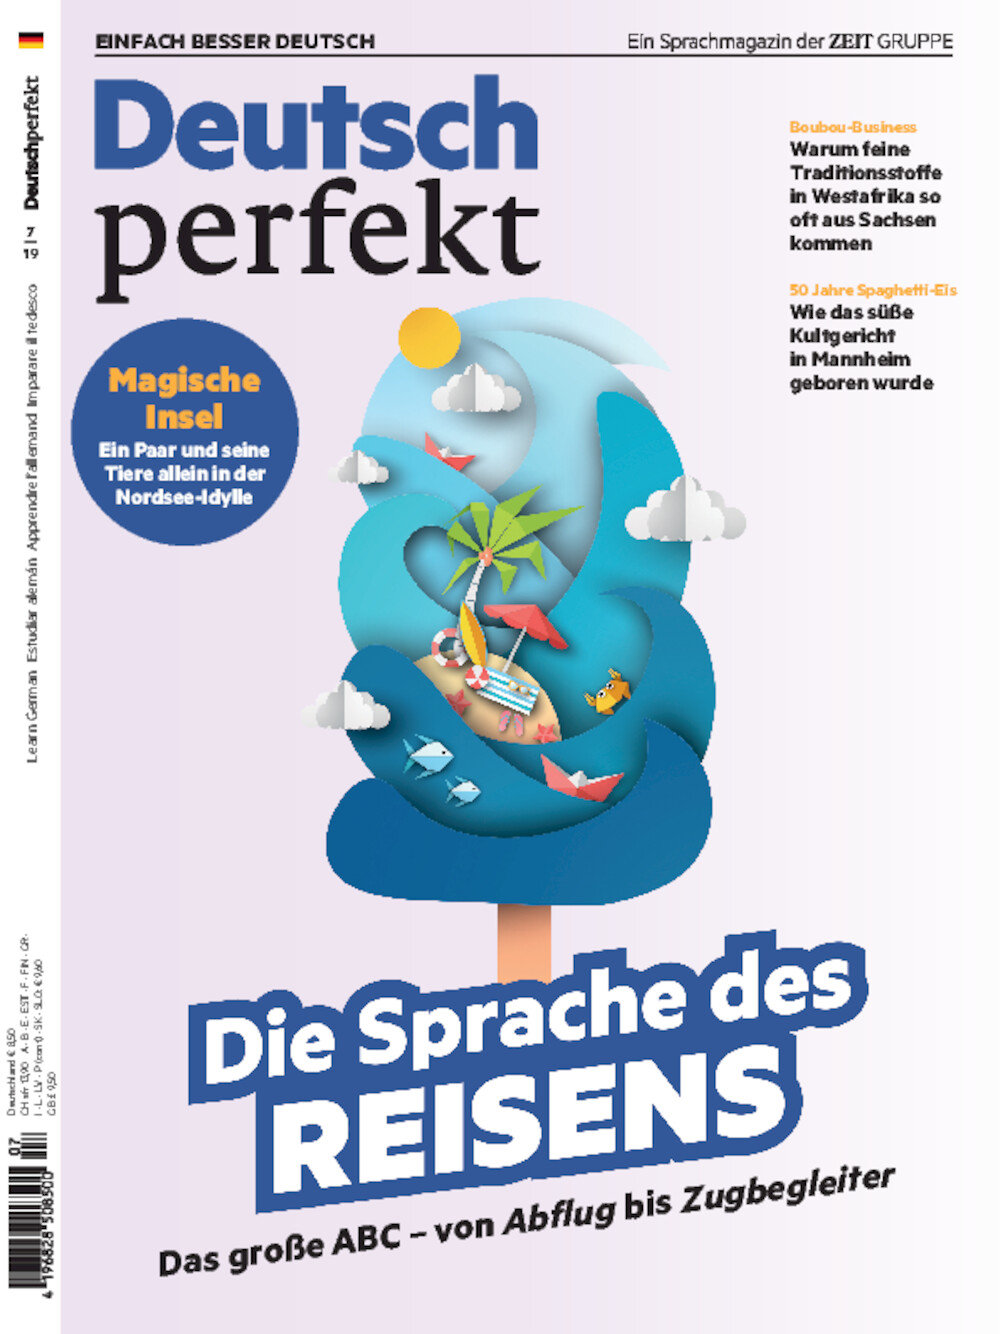 Deutsch perfekt ePaper 07/2019